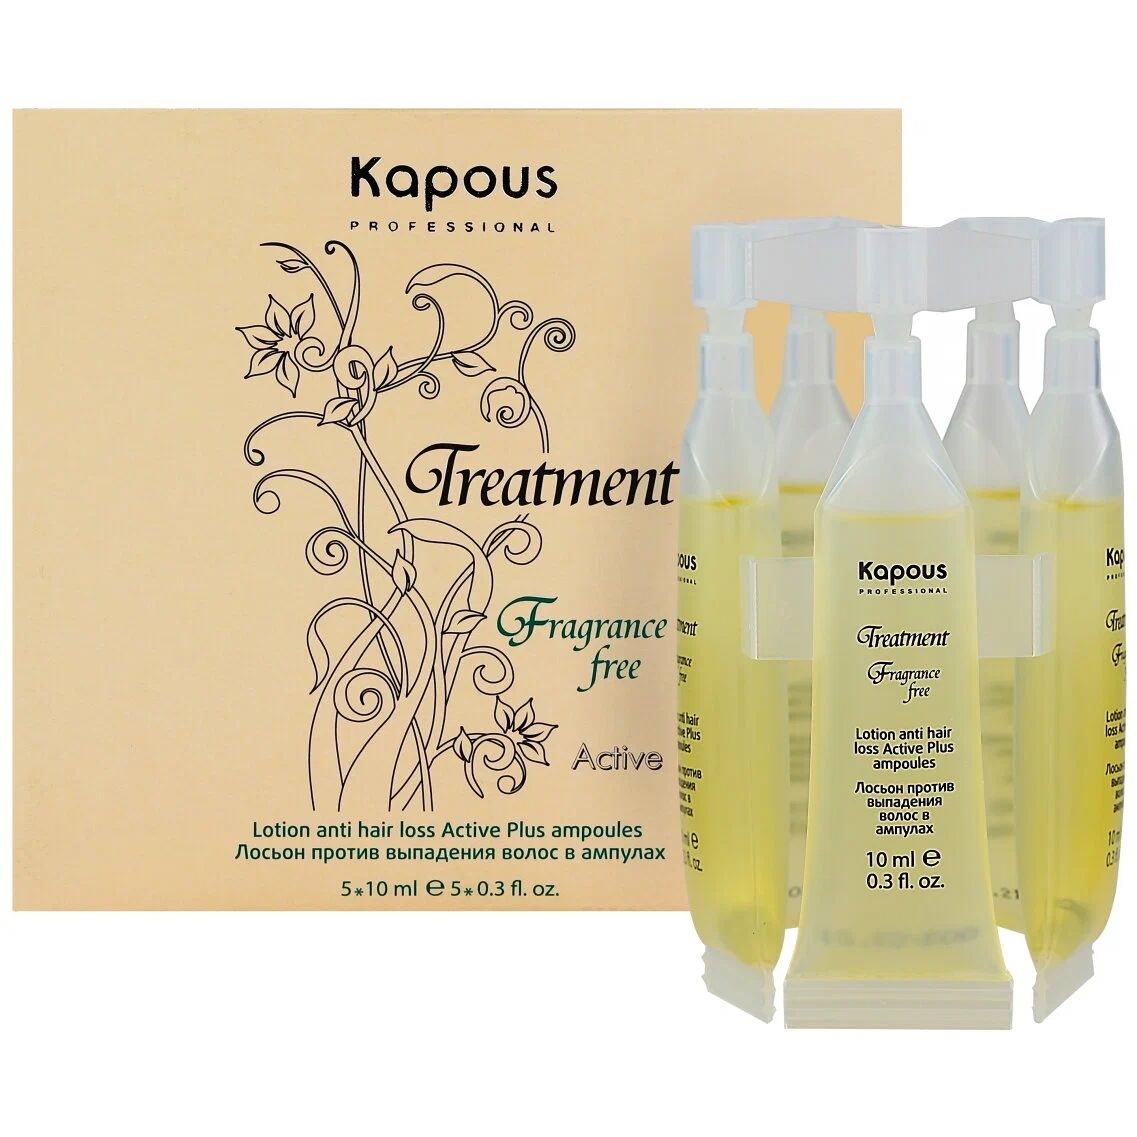 Лосьон для волос Kapous Professional Treatment Fragrance free в ампулах 5х10 мл лосьон против сухой перхоти в ампулах bioactive treatment